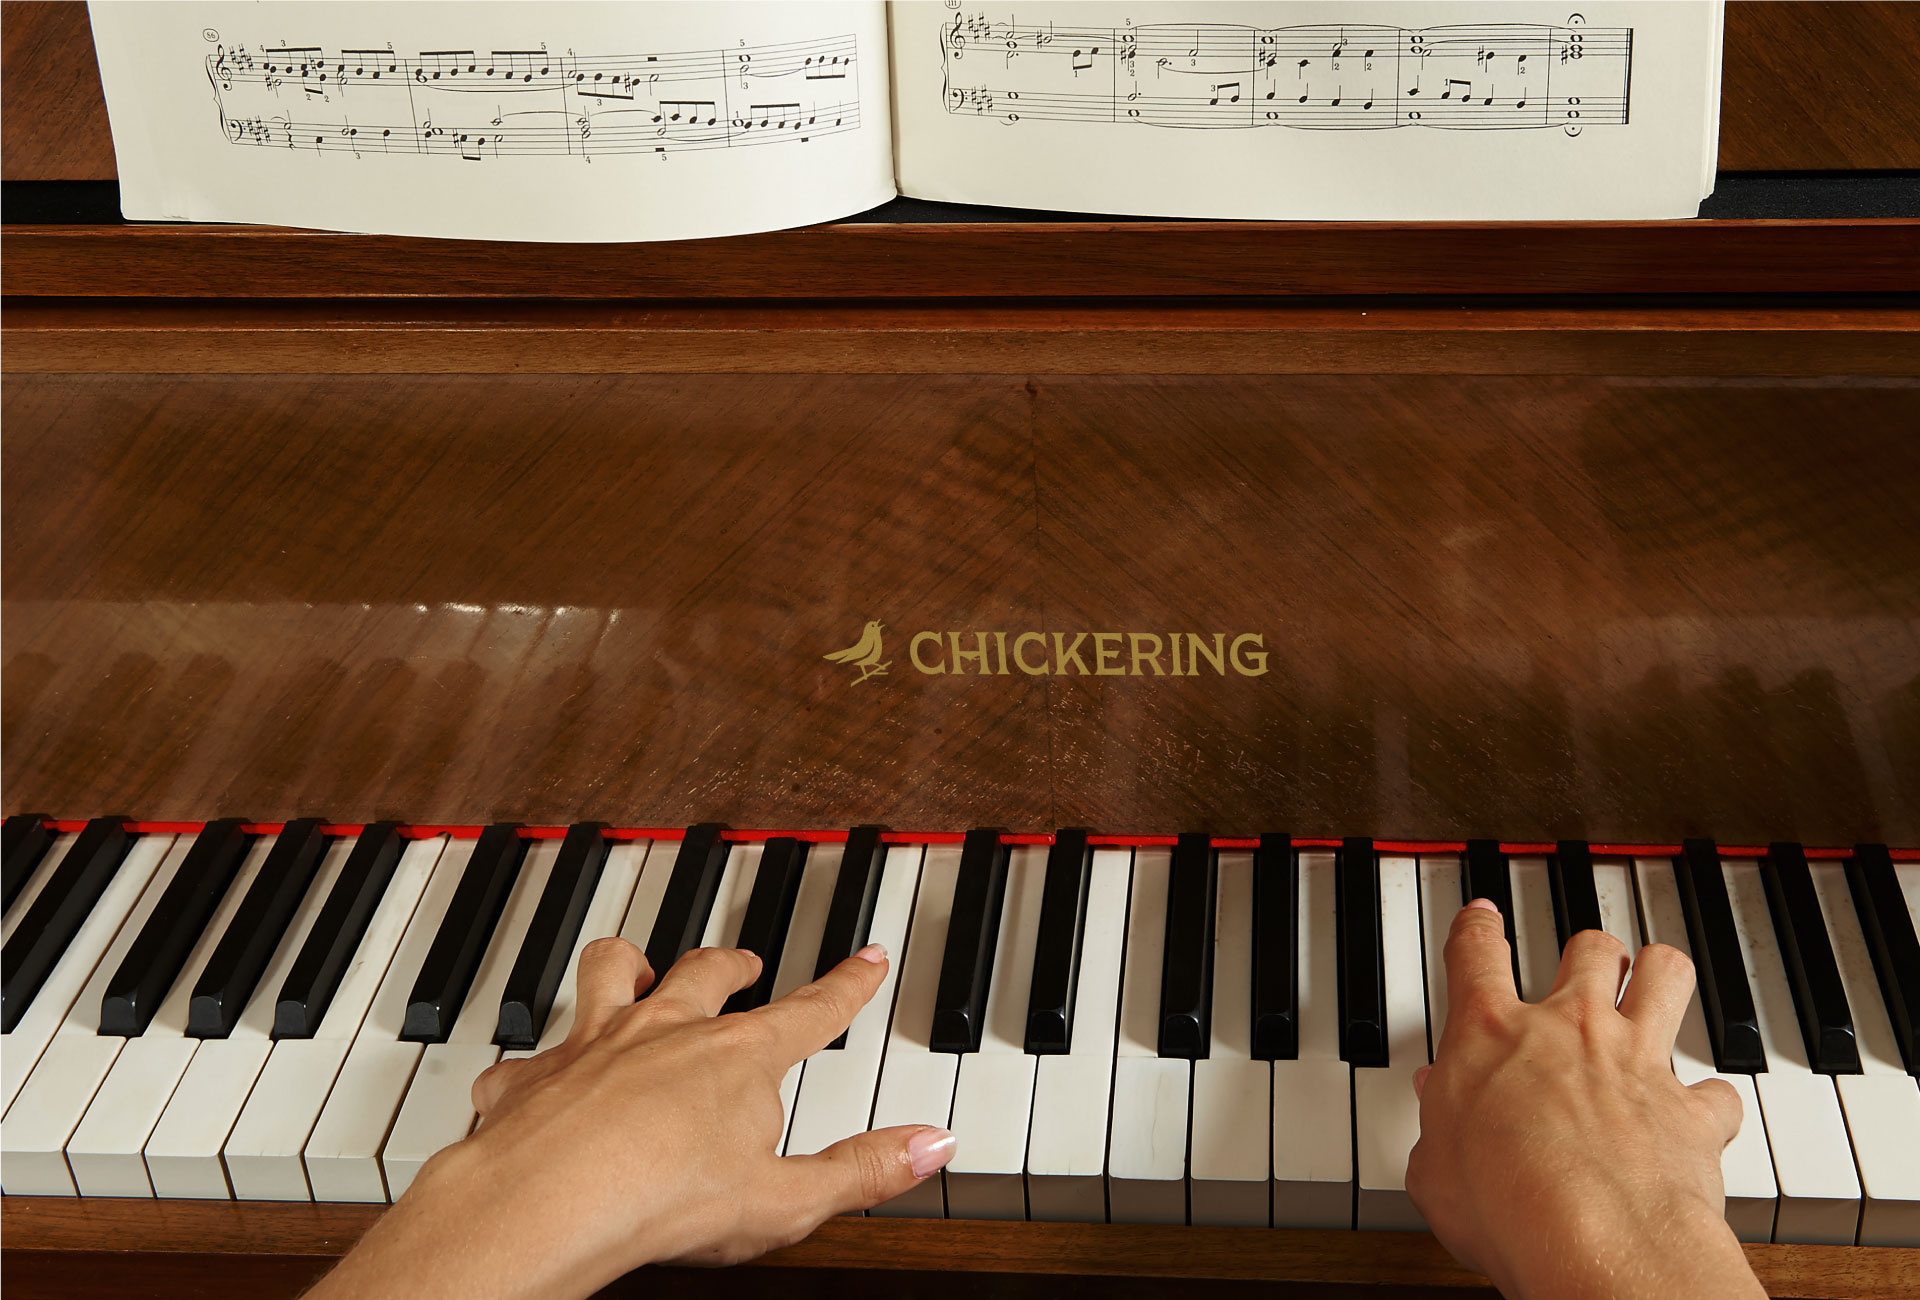 Chickering Pianos